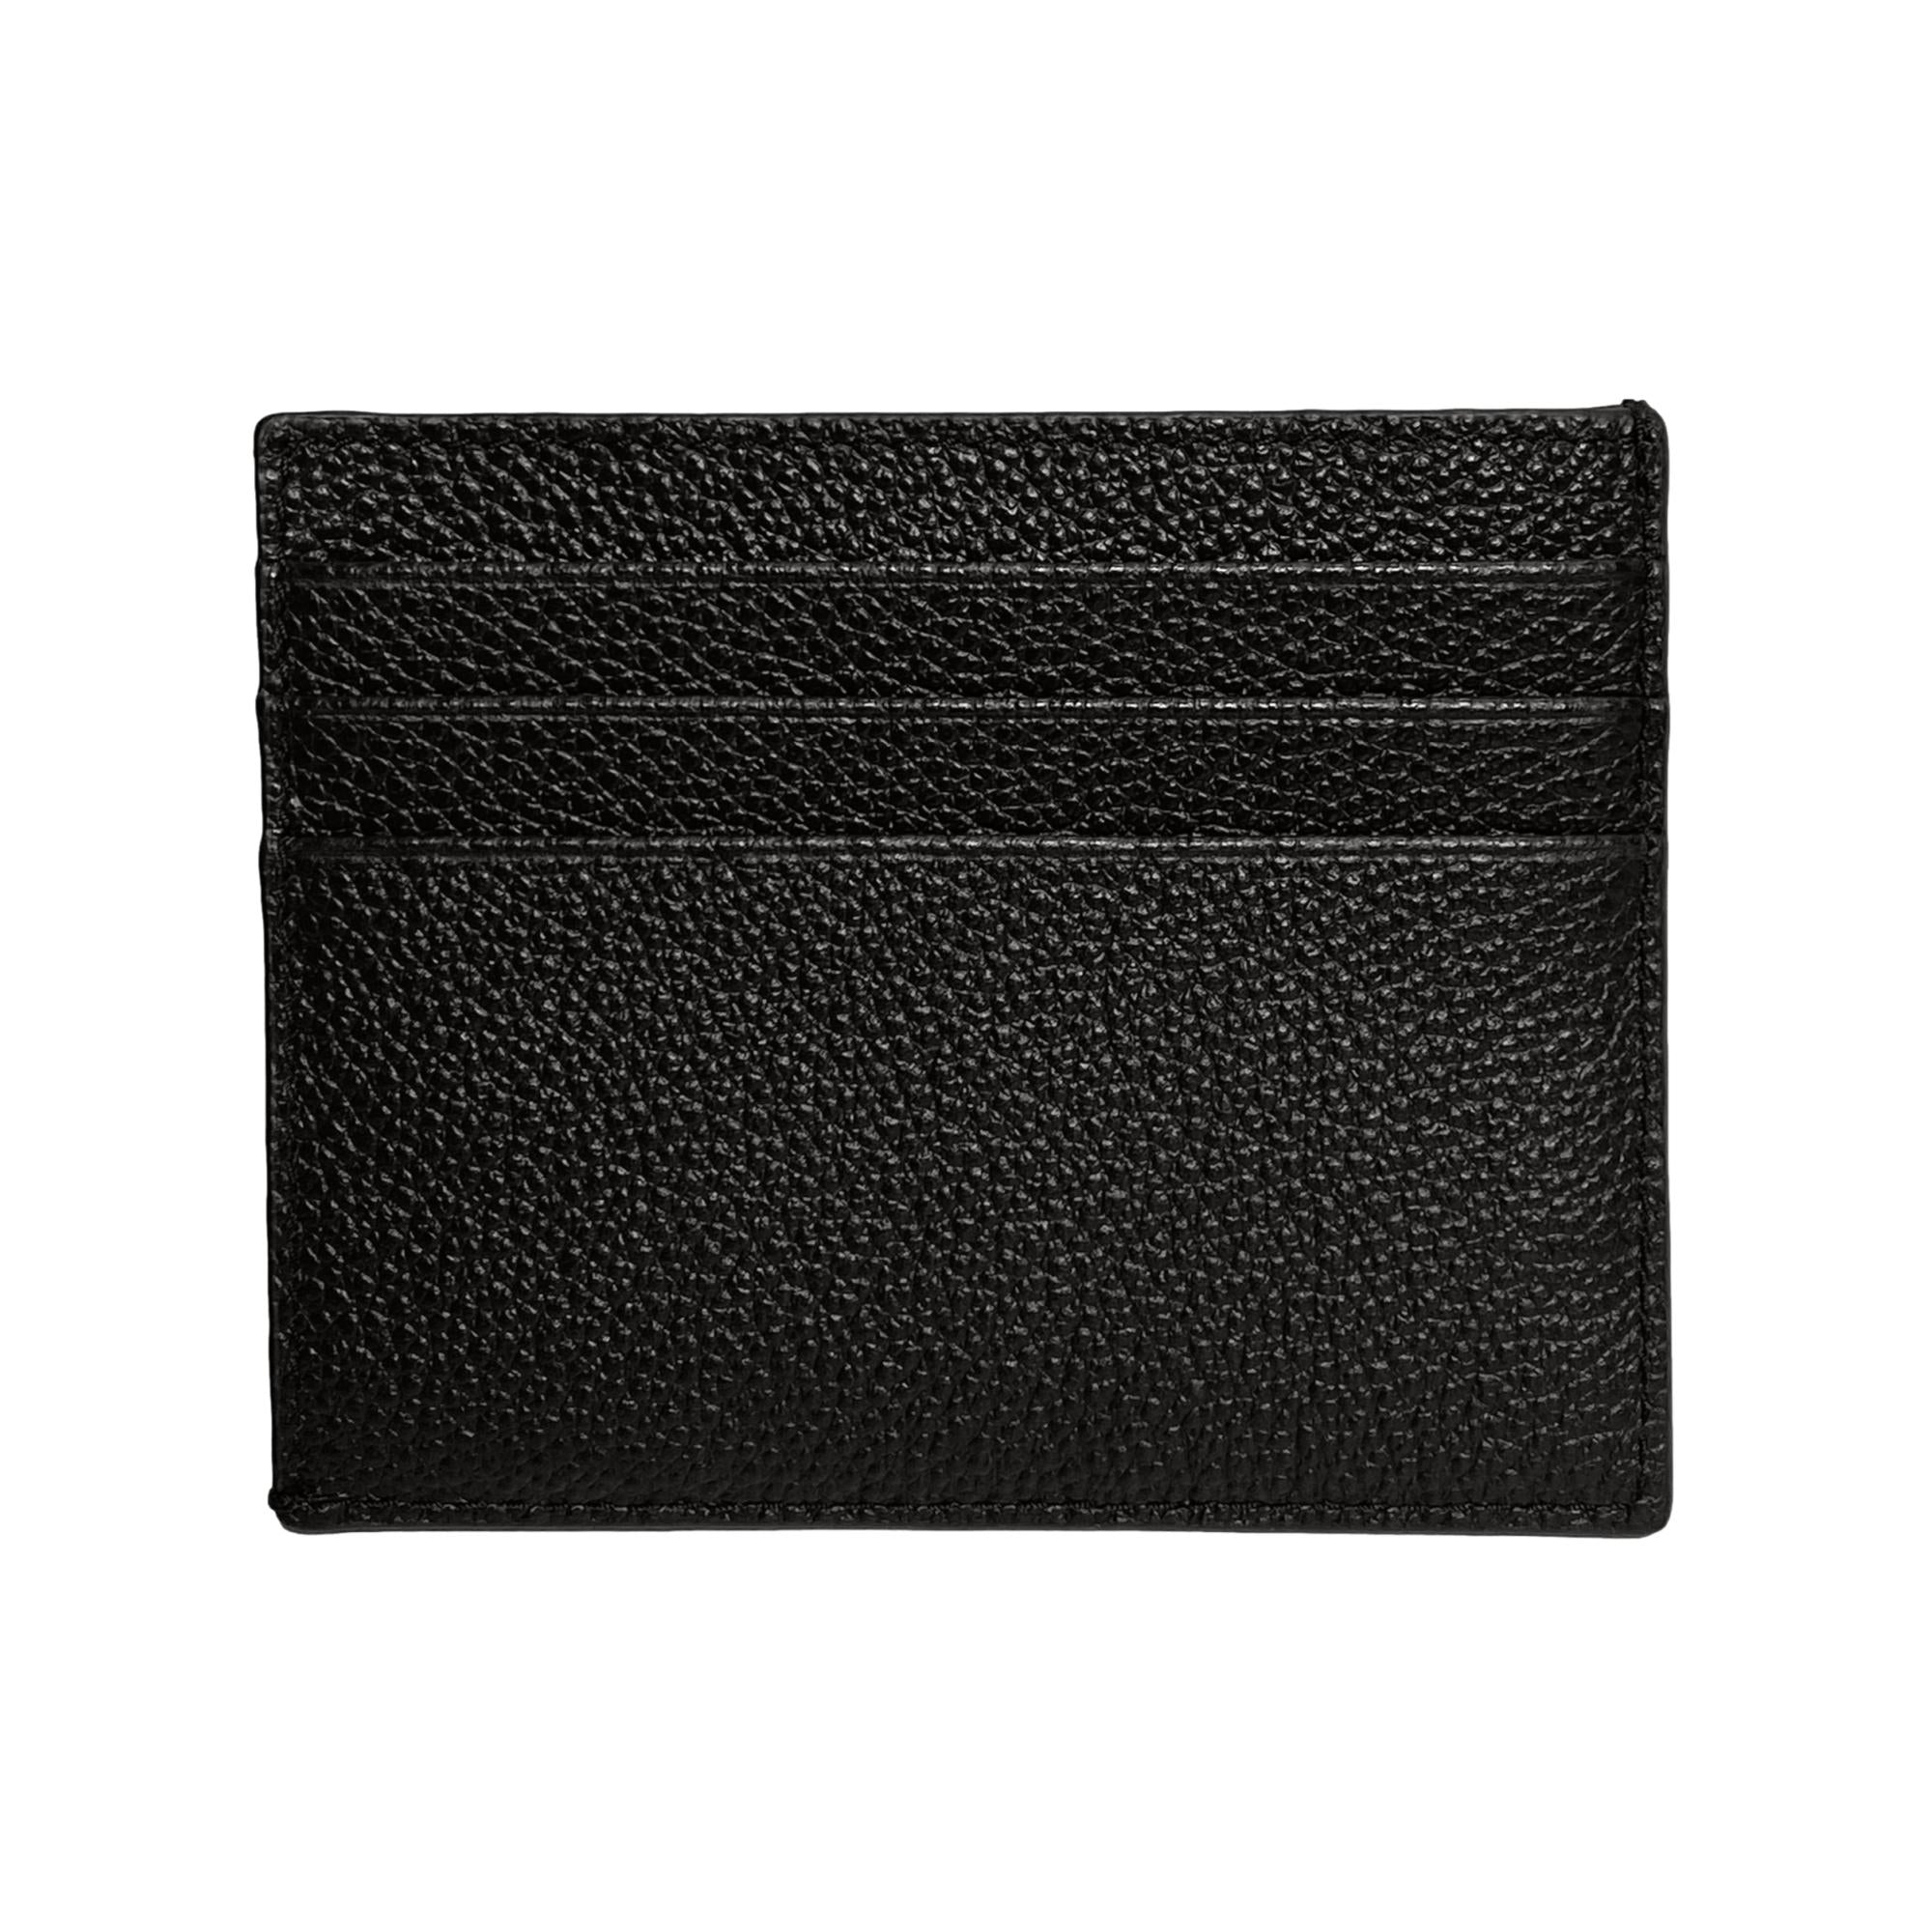 Prada Vitello Micro Grain Leather Black Card Holder Wallet